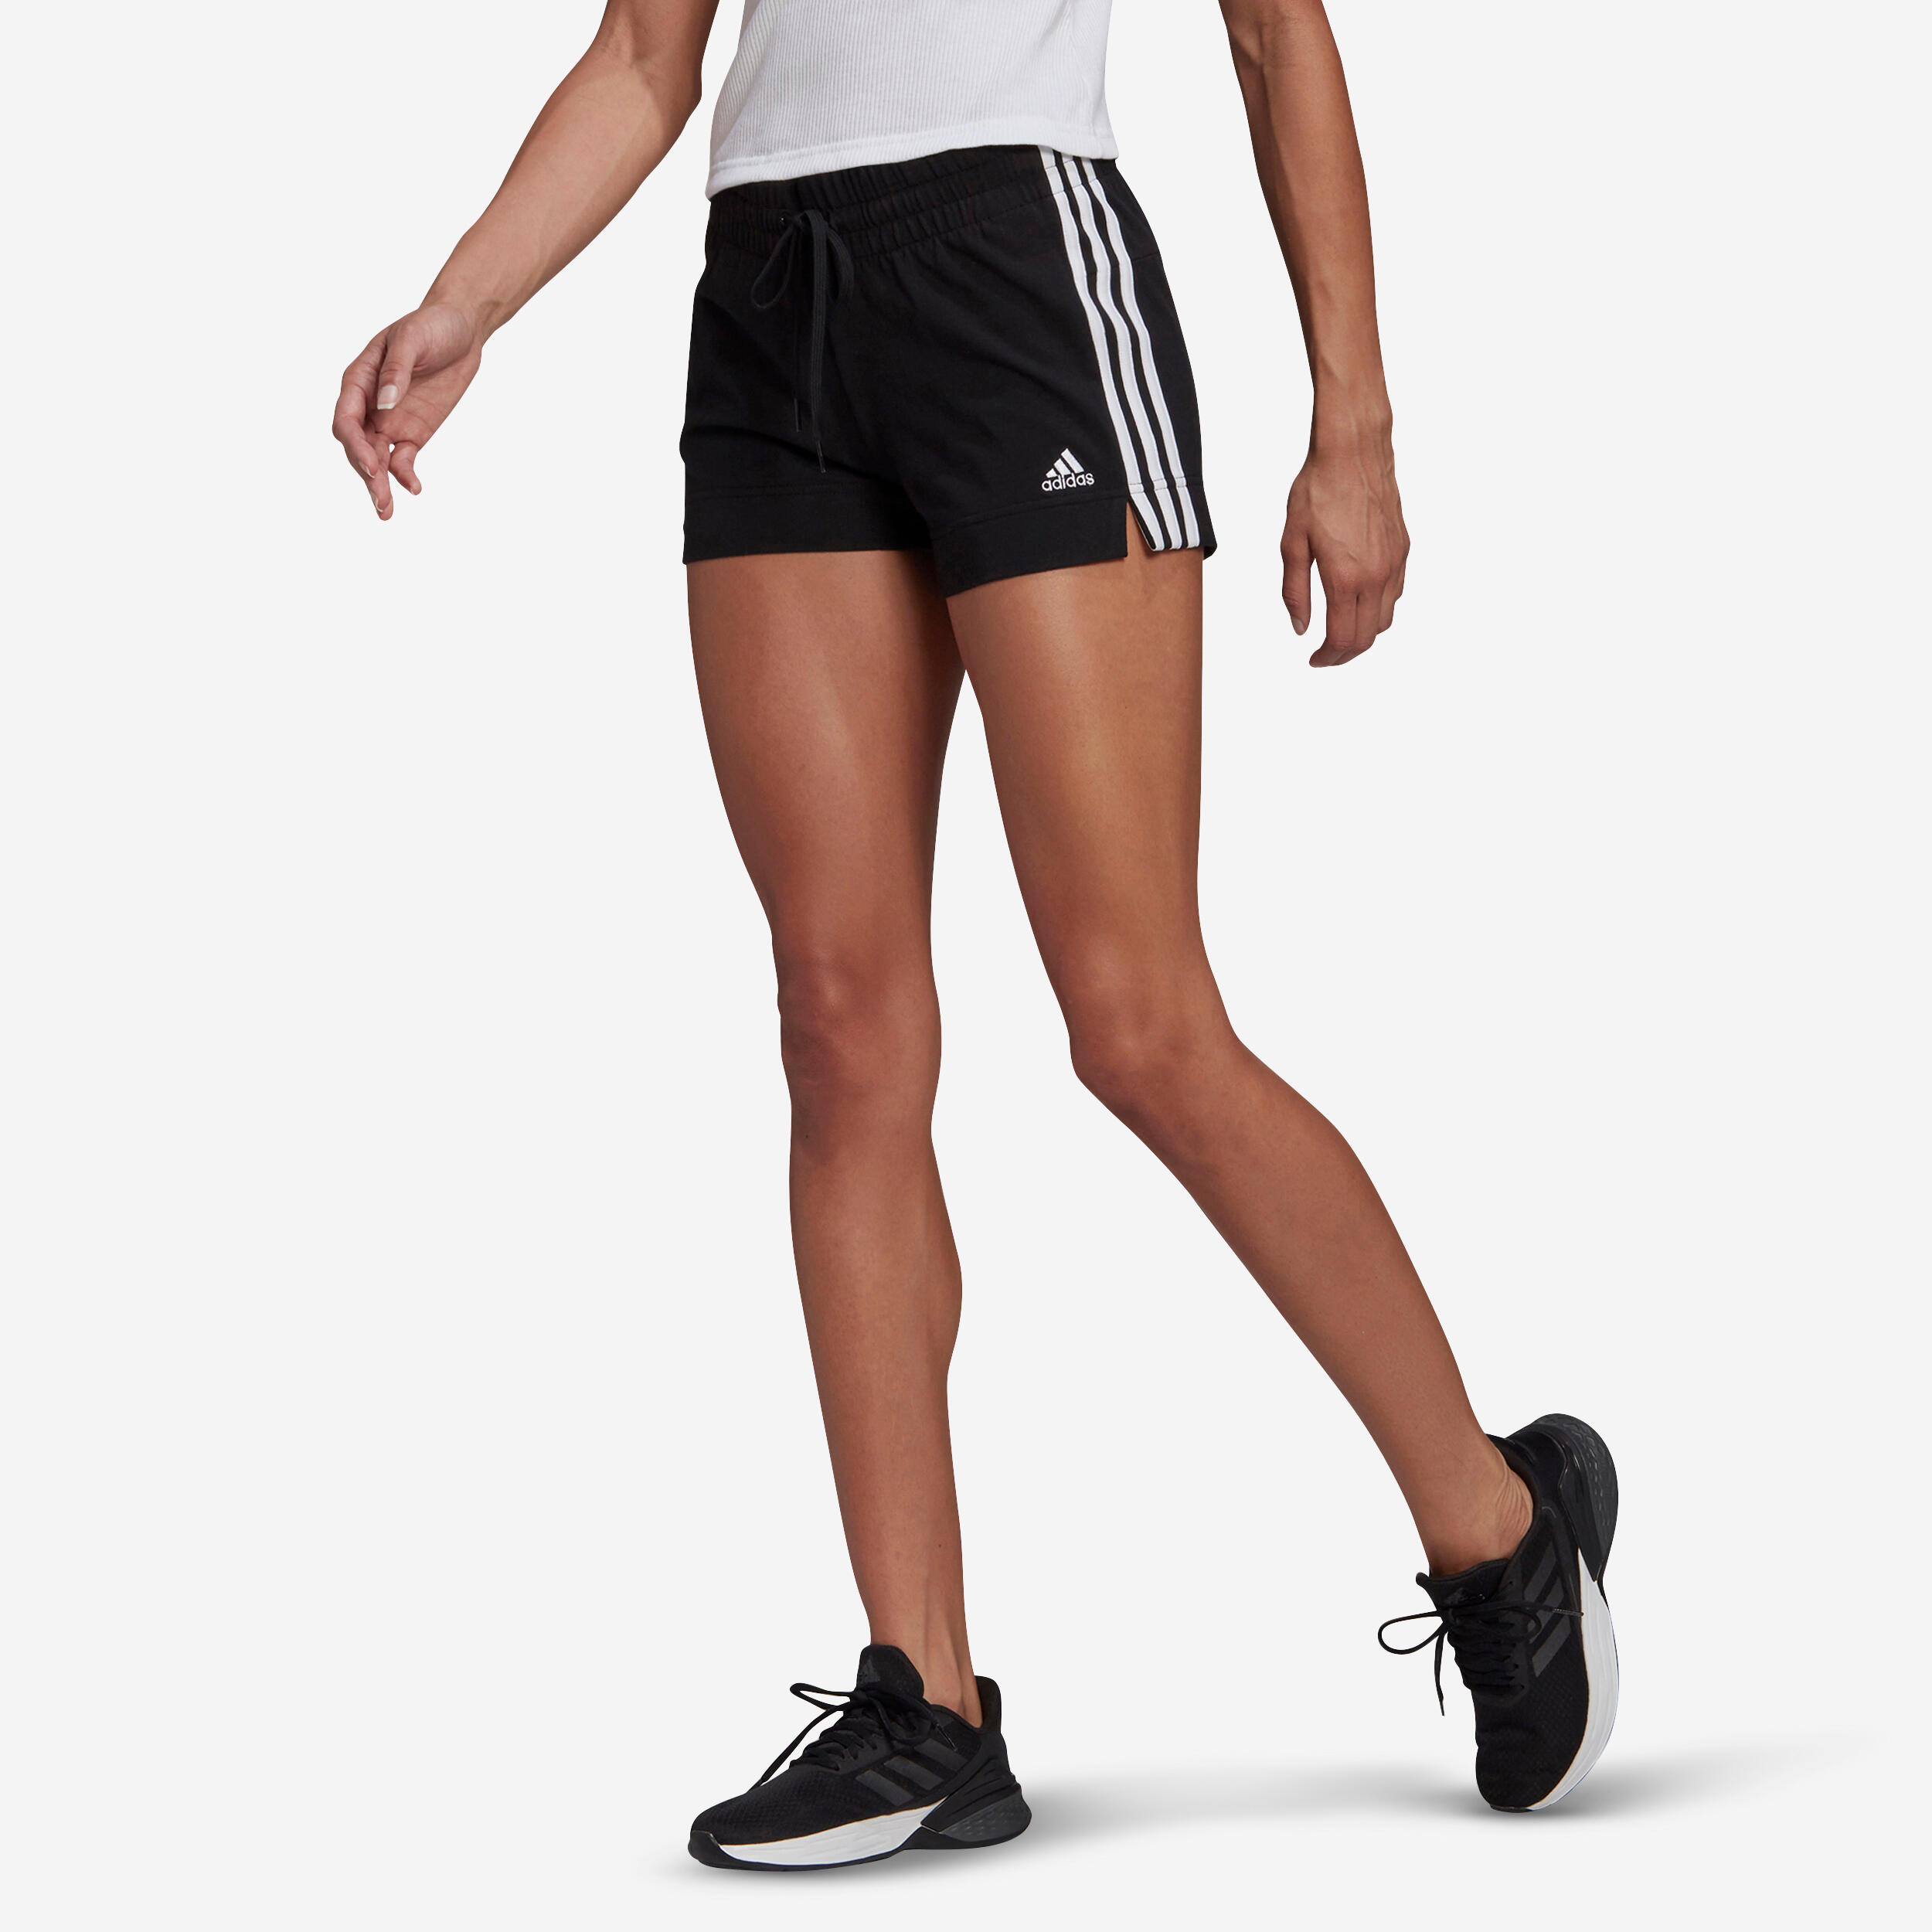 Women's Soft Training Fitness Shorts - Black 1/6